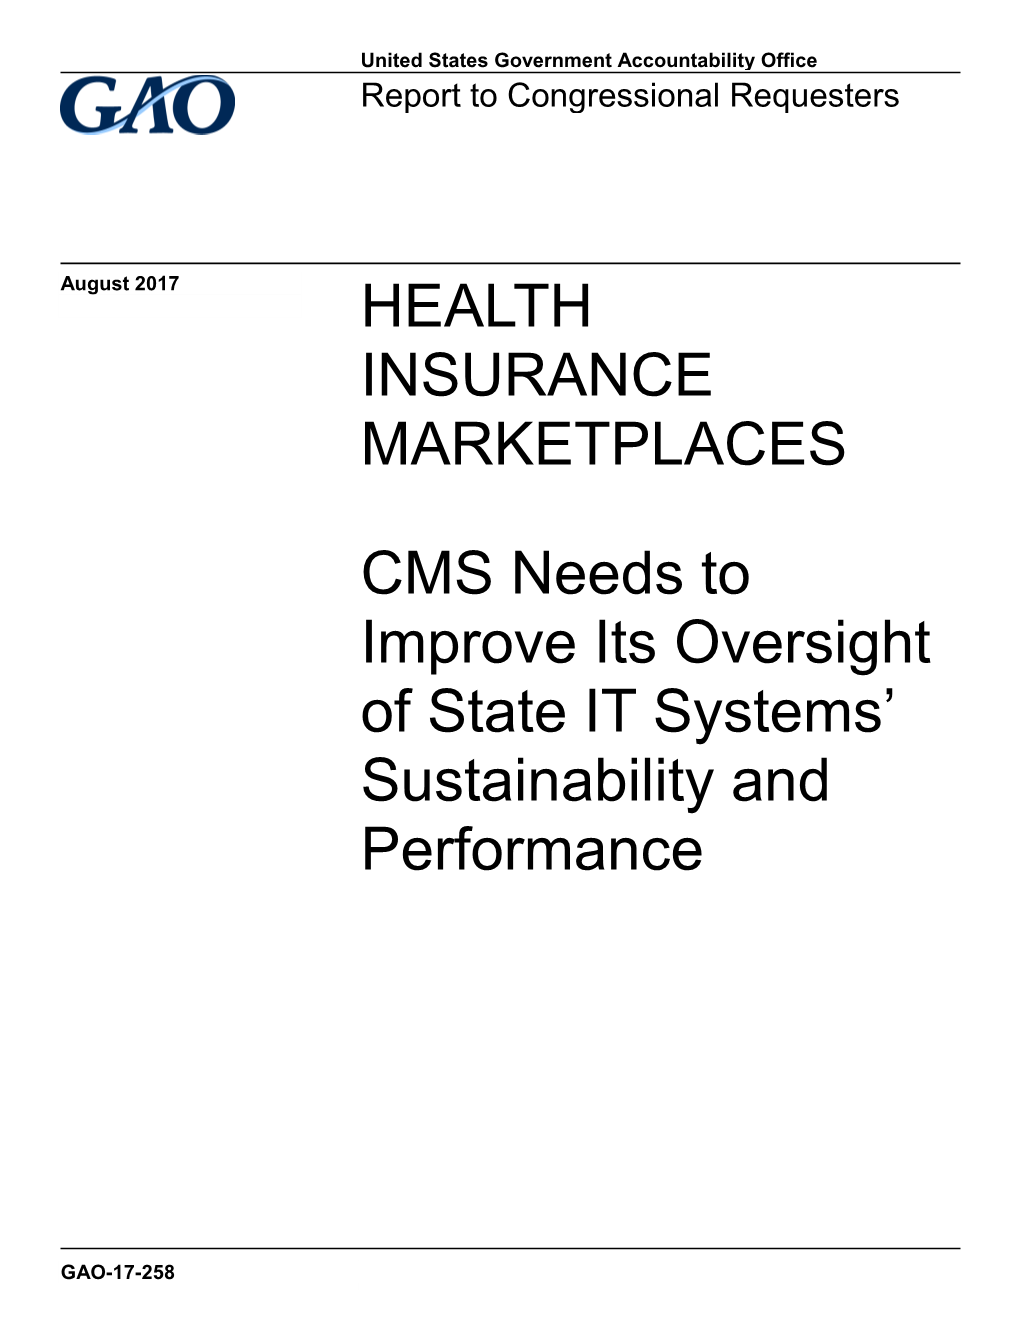 Gao-17-258, Health Insurance Marketplaces